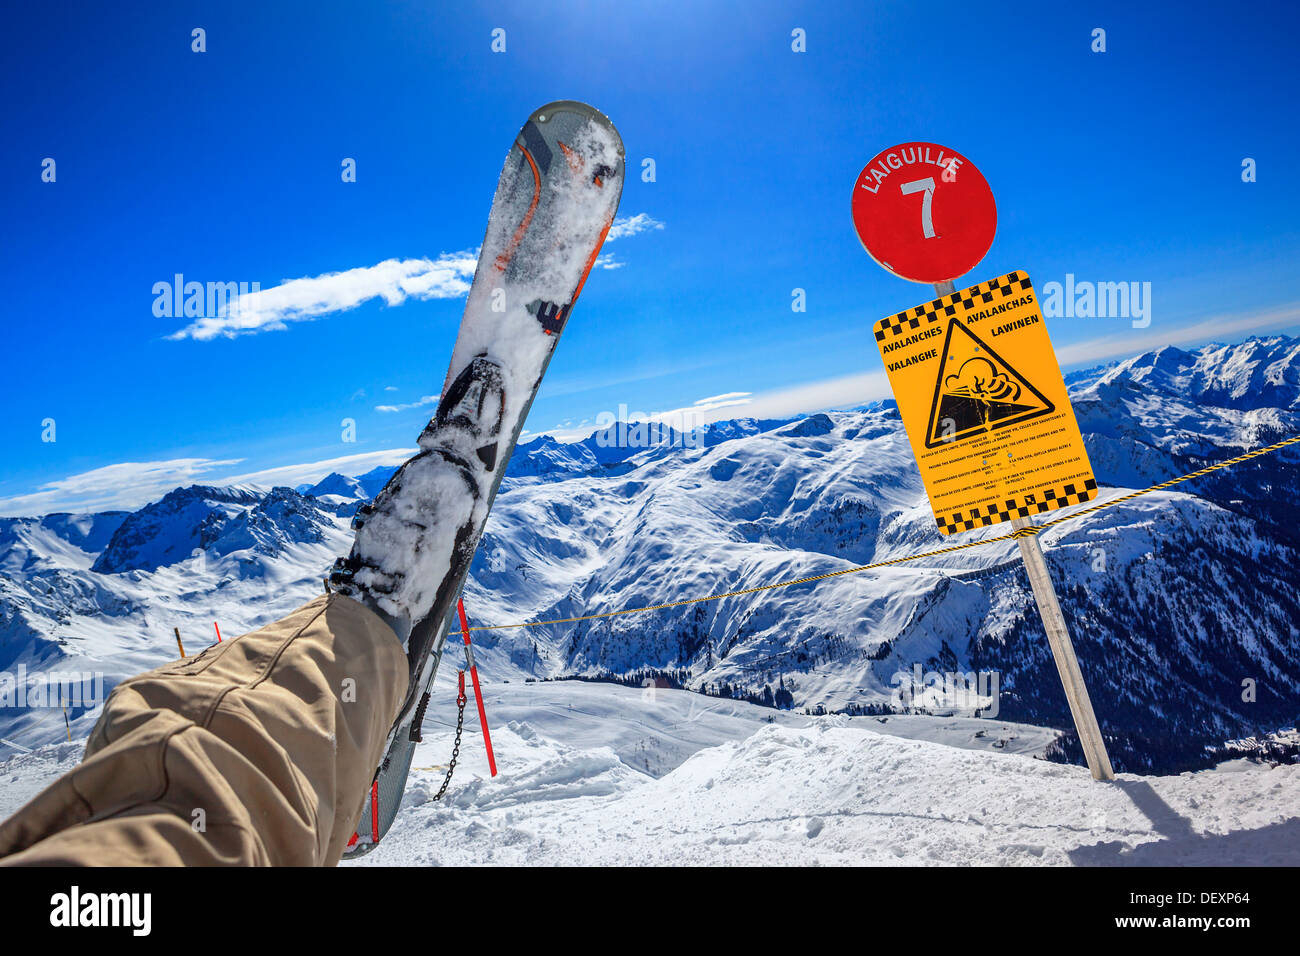 Man riding on skis fall down Stock Photo